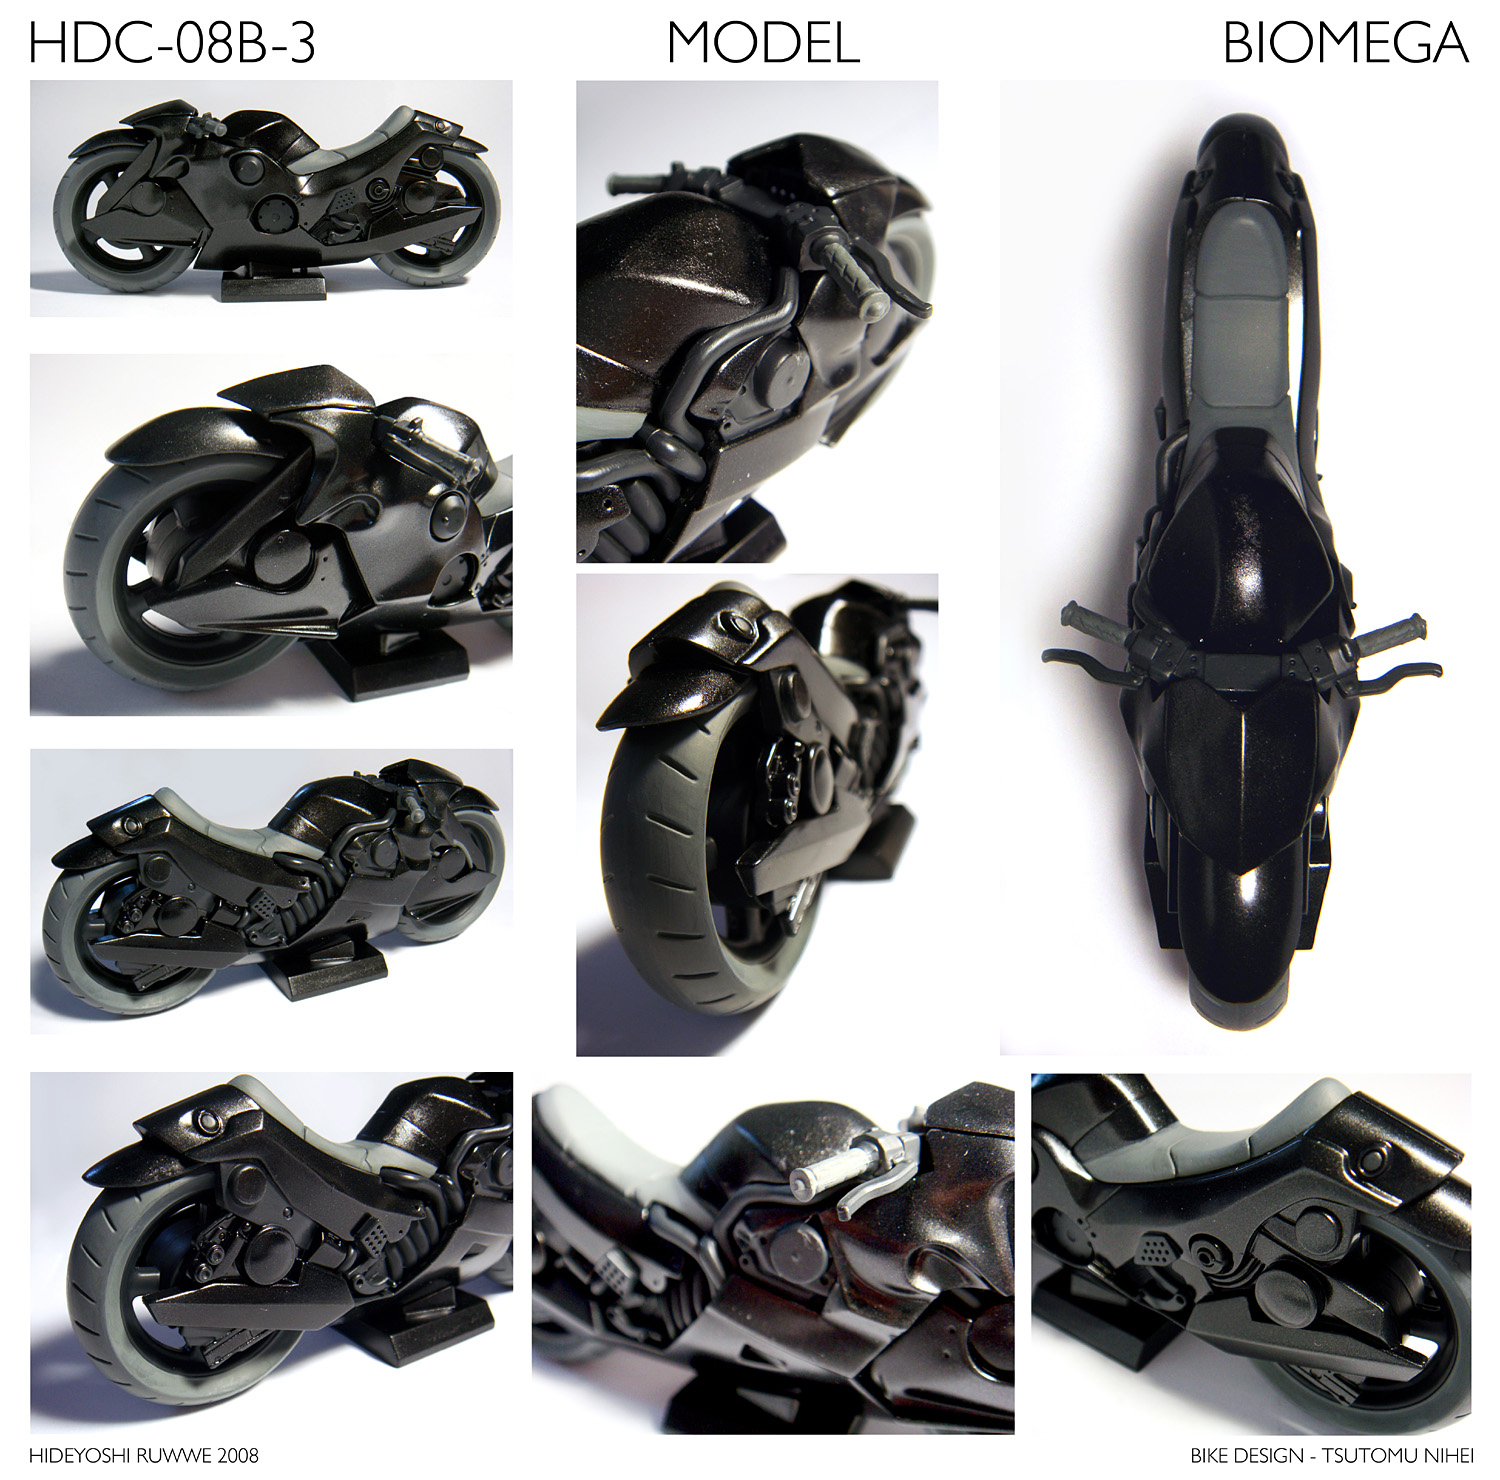 Biomega___Bike_model_by_Hideyoshi.jpg